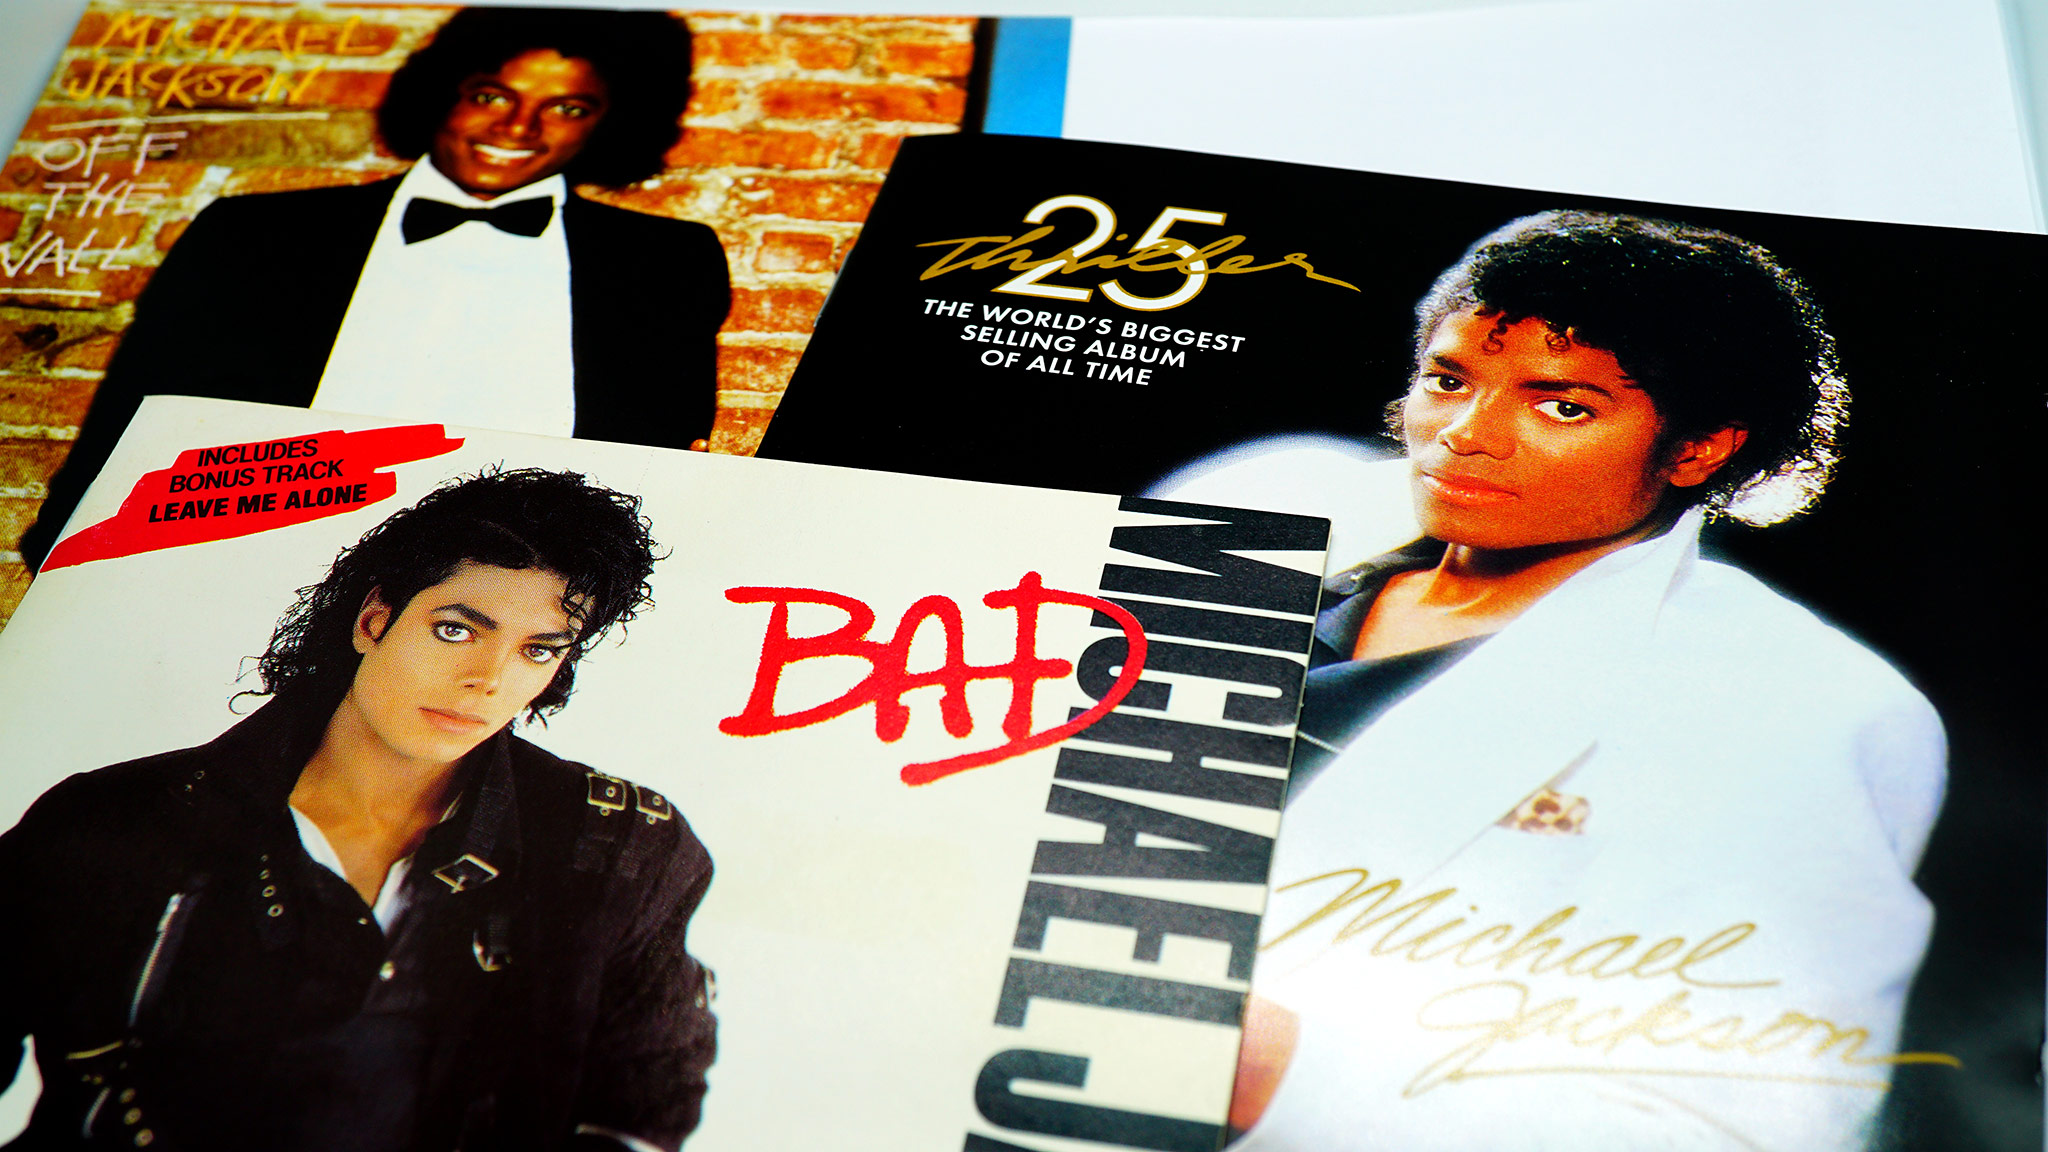 Michael Jackson, Michael Jackson news, Michael Jackson death, Michael Jackson anniversary, Michael Jackson allegations, Michael Jackson life, Michael Jackson music, news on Michael Jackson, Michael Jackson legacy, Ellis Cashmore